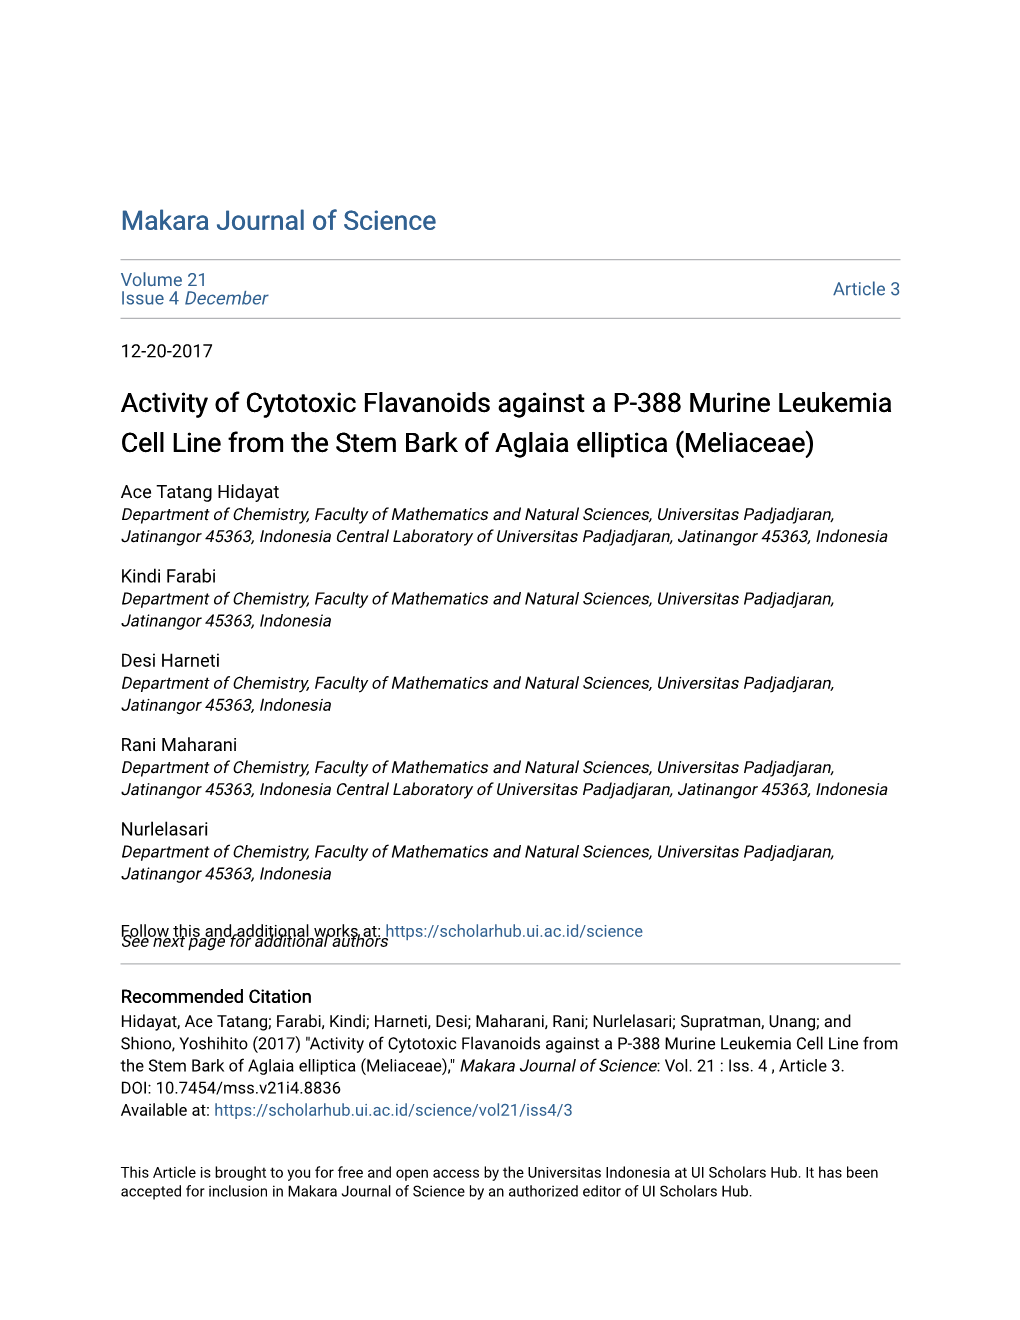 Activity of Cytotoxic Flavanoids Against a P-388 Murine Leukemia Cell Line from the Stem Bark of Aglaia Elliptica (Meliaceae)